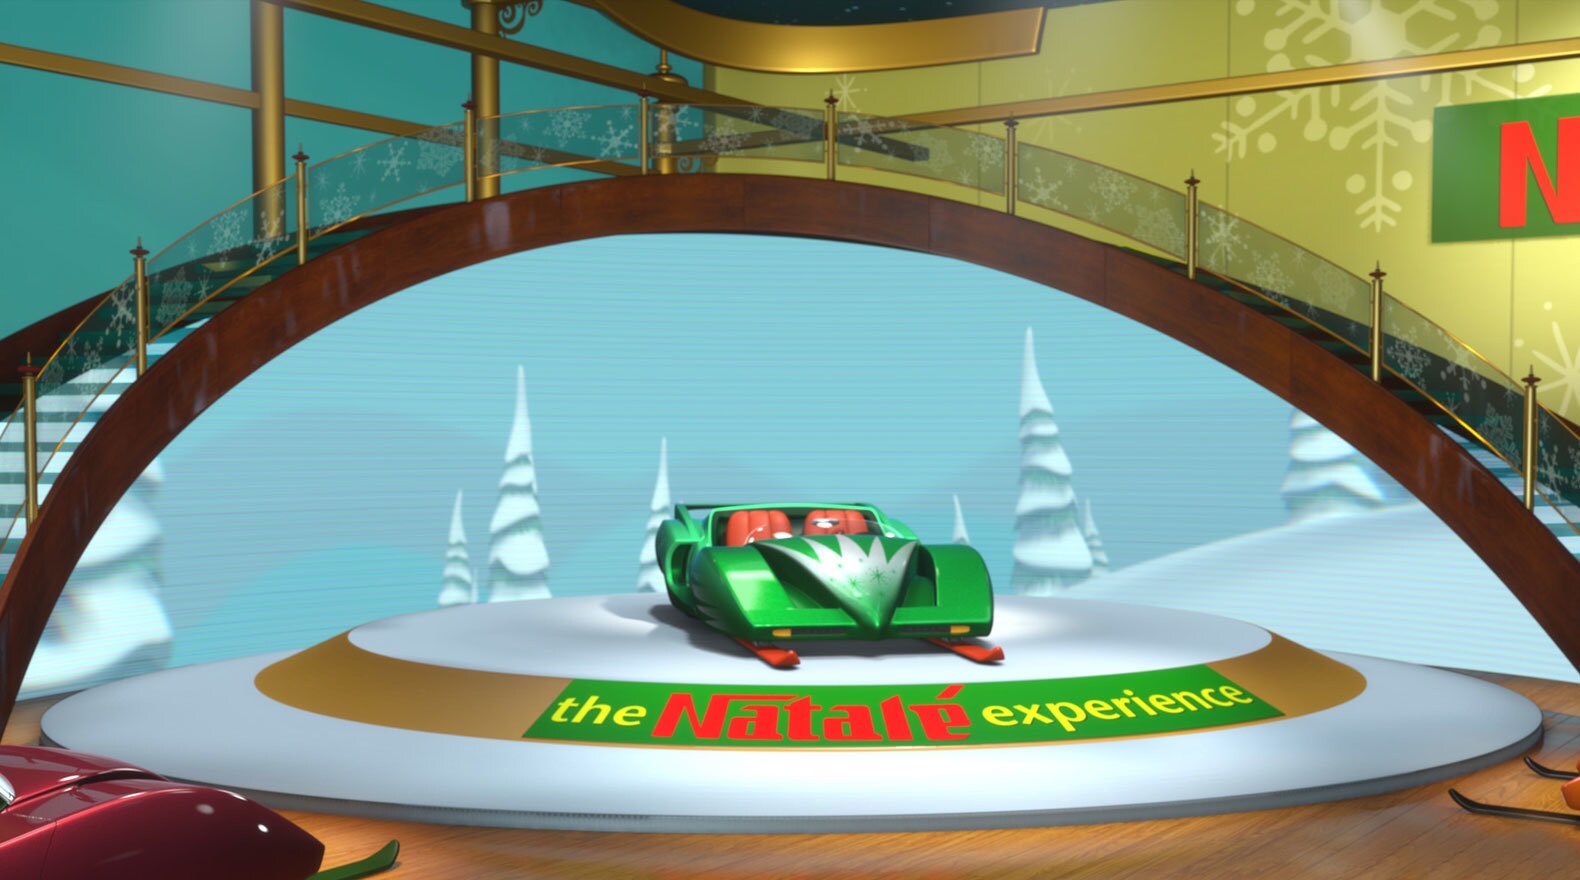 Sorenson's Snowmobile Emporium from "Prep & Landing"